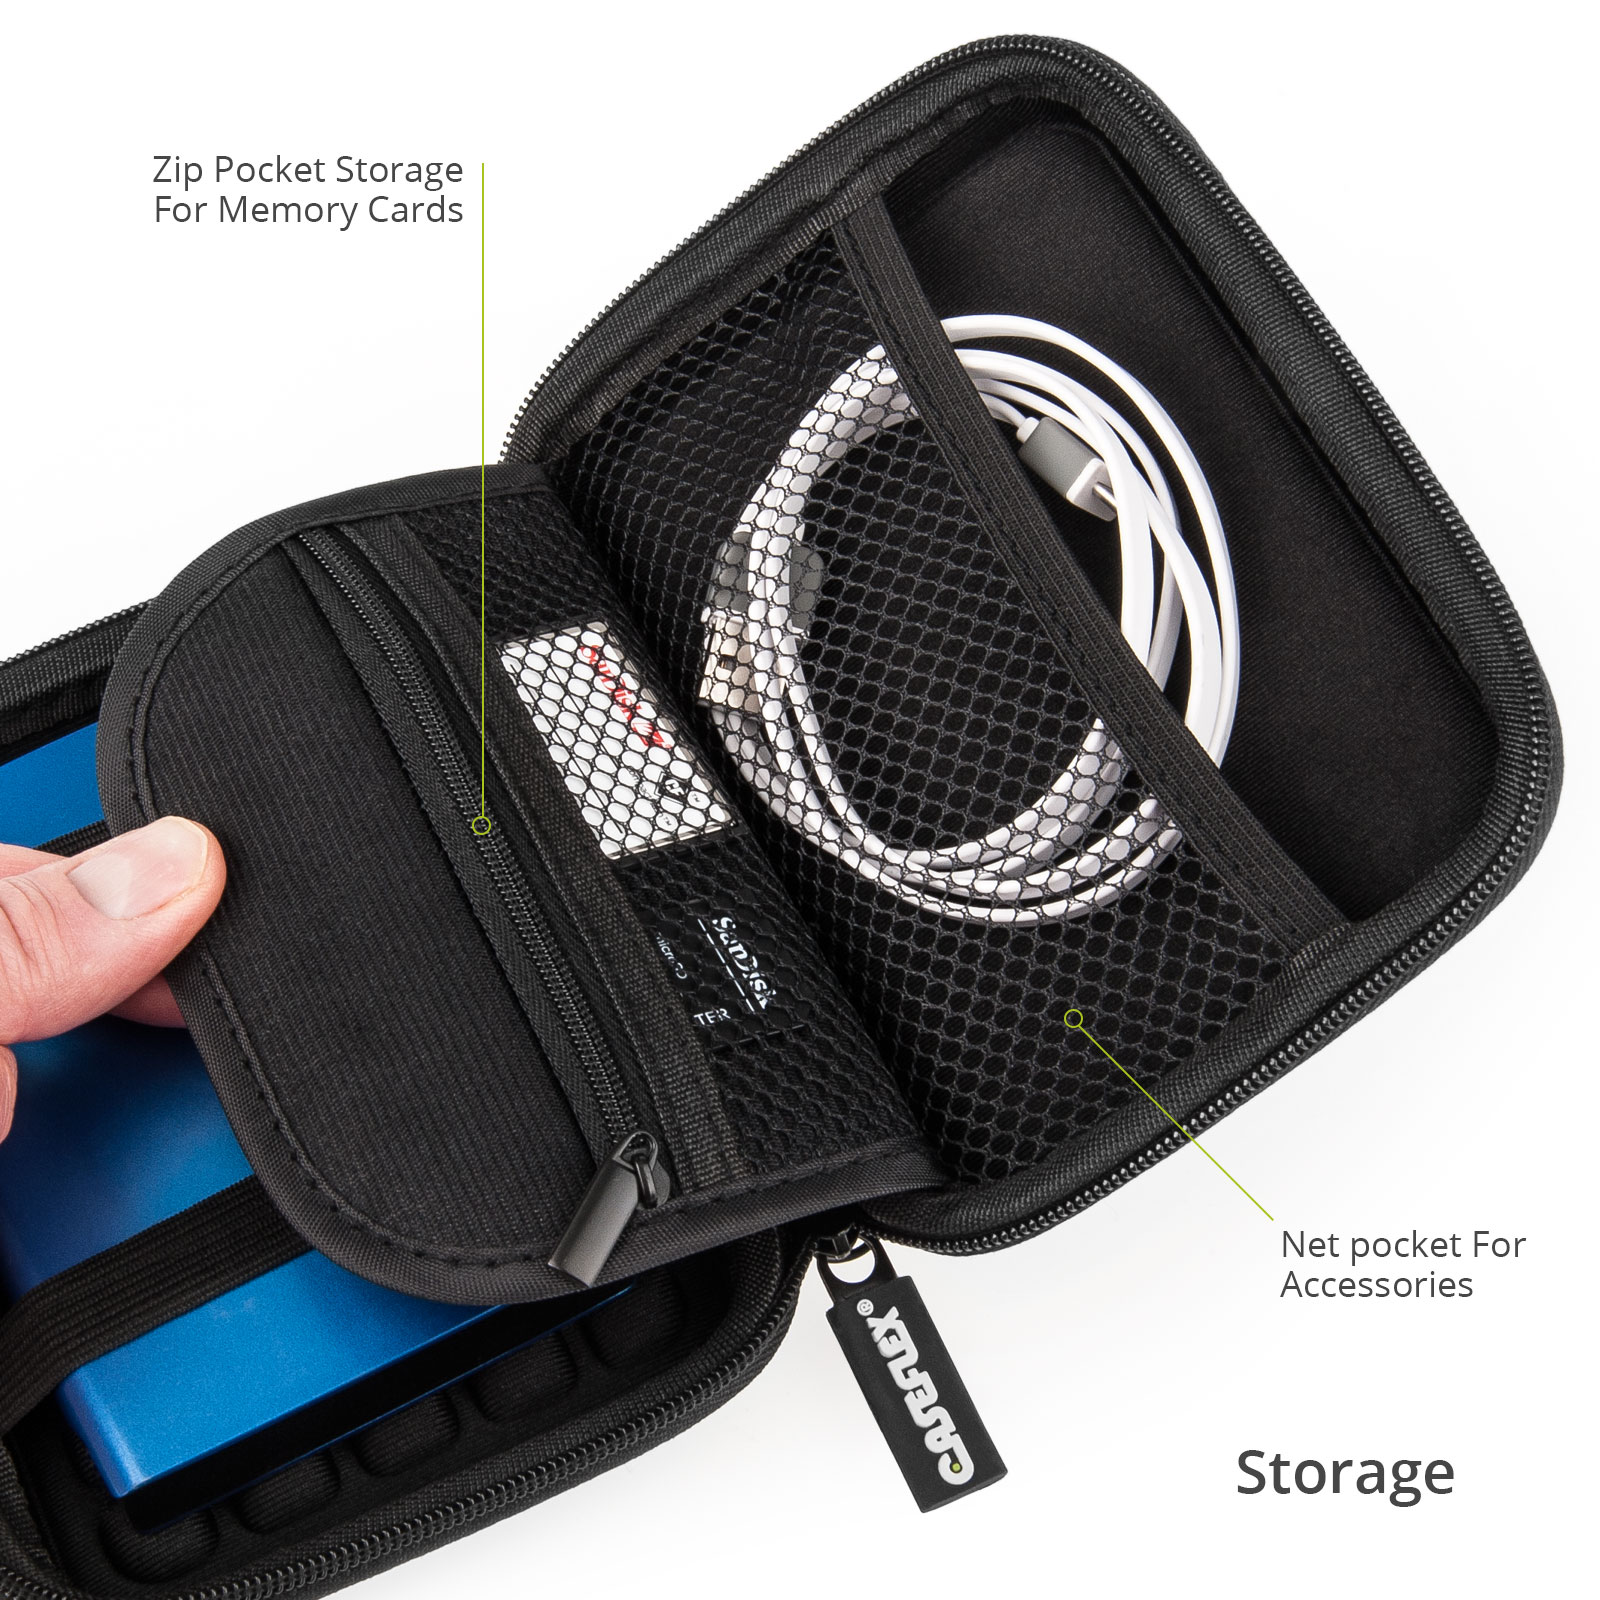 Caseflex Shockproof Hard Drive Case for 2.5 inch Portable External Hard Drives - Black